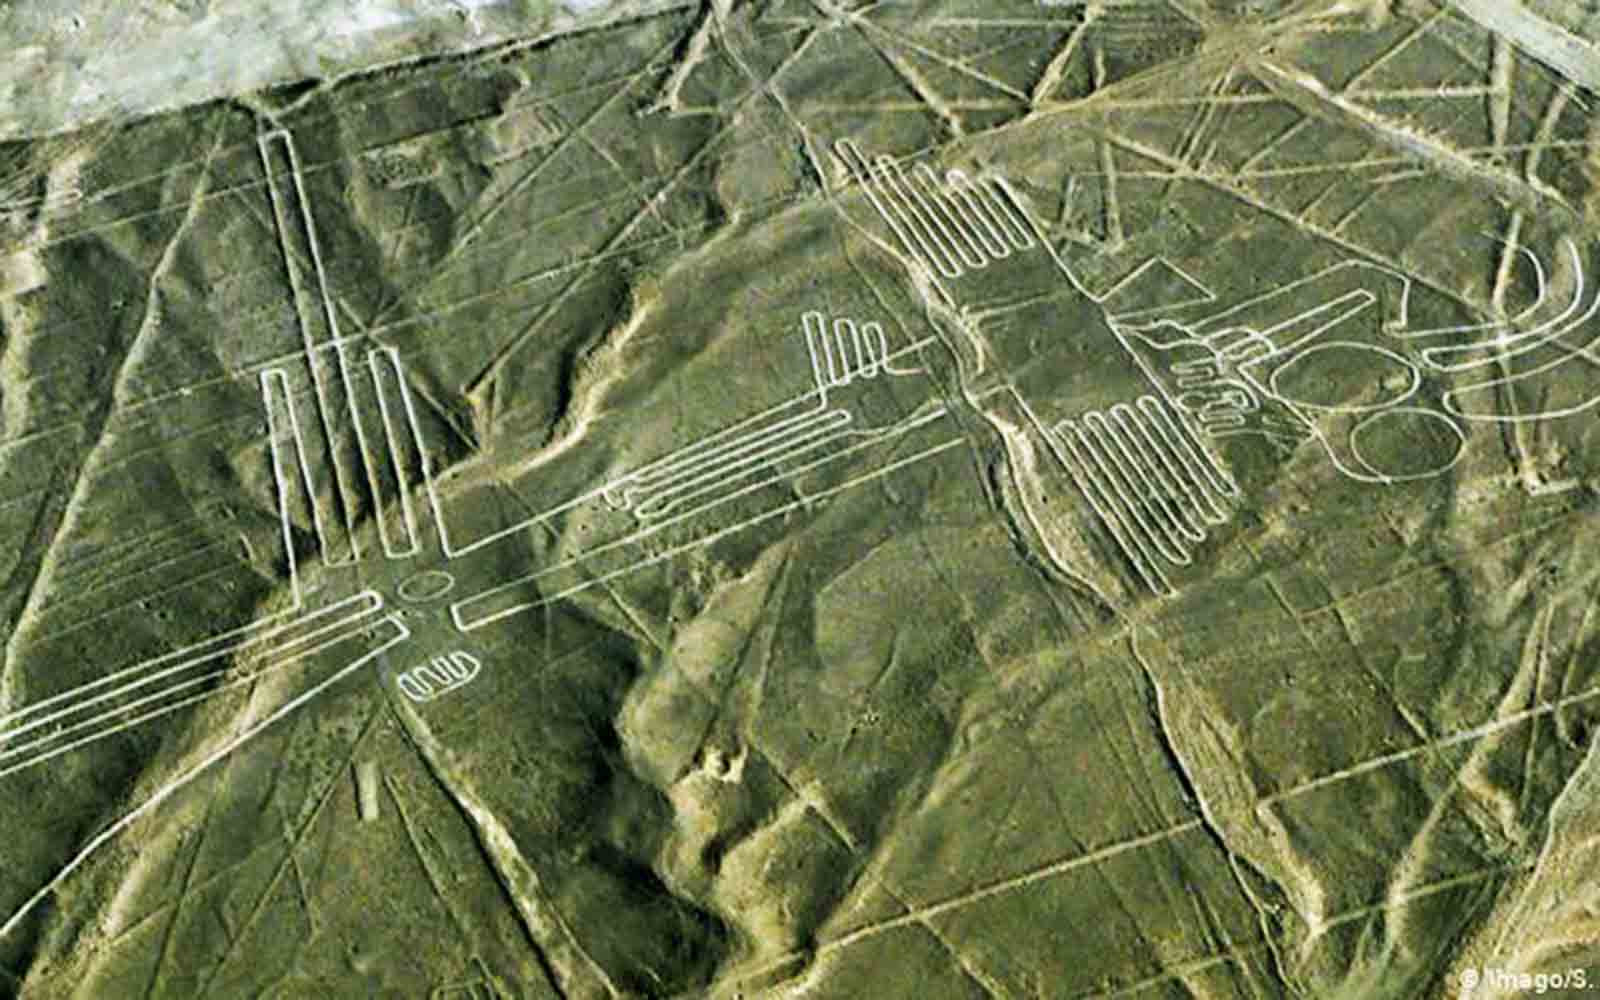 Nazca Lines image-2